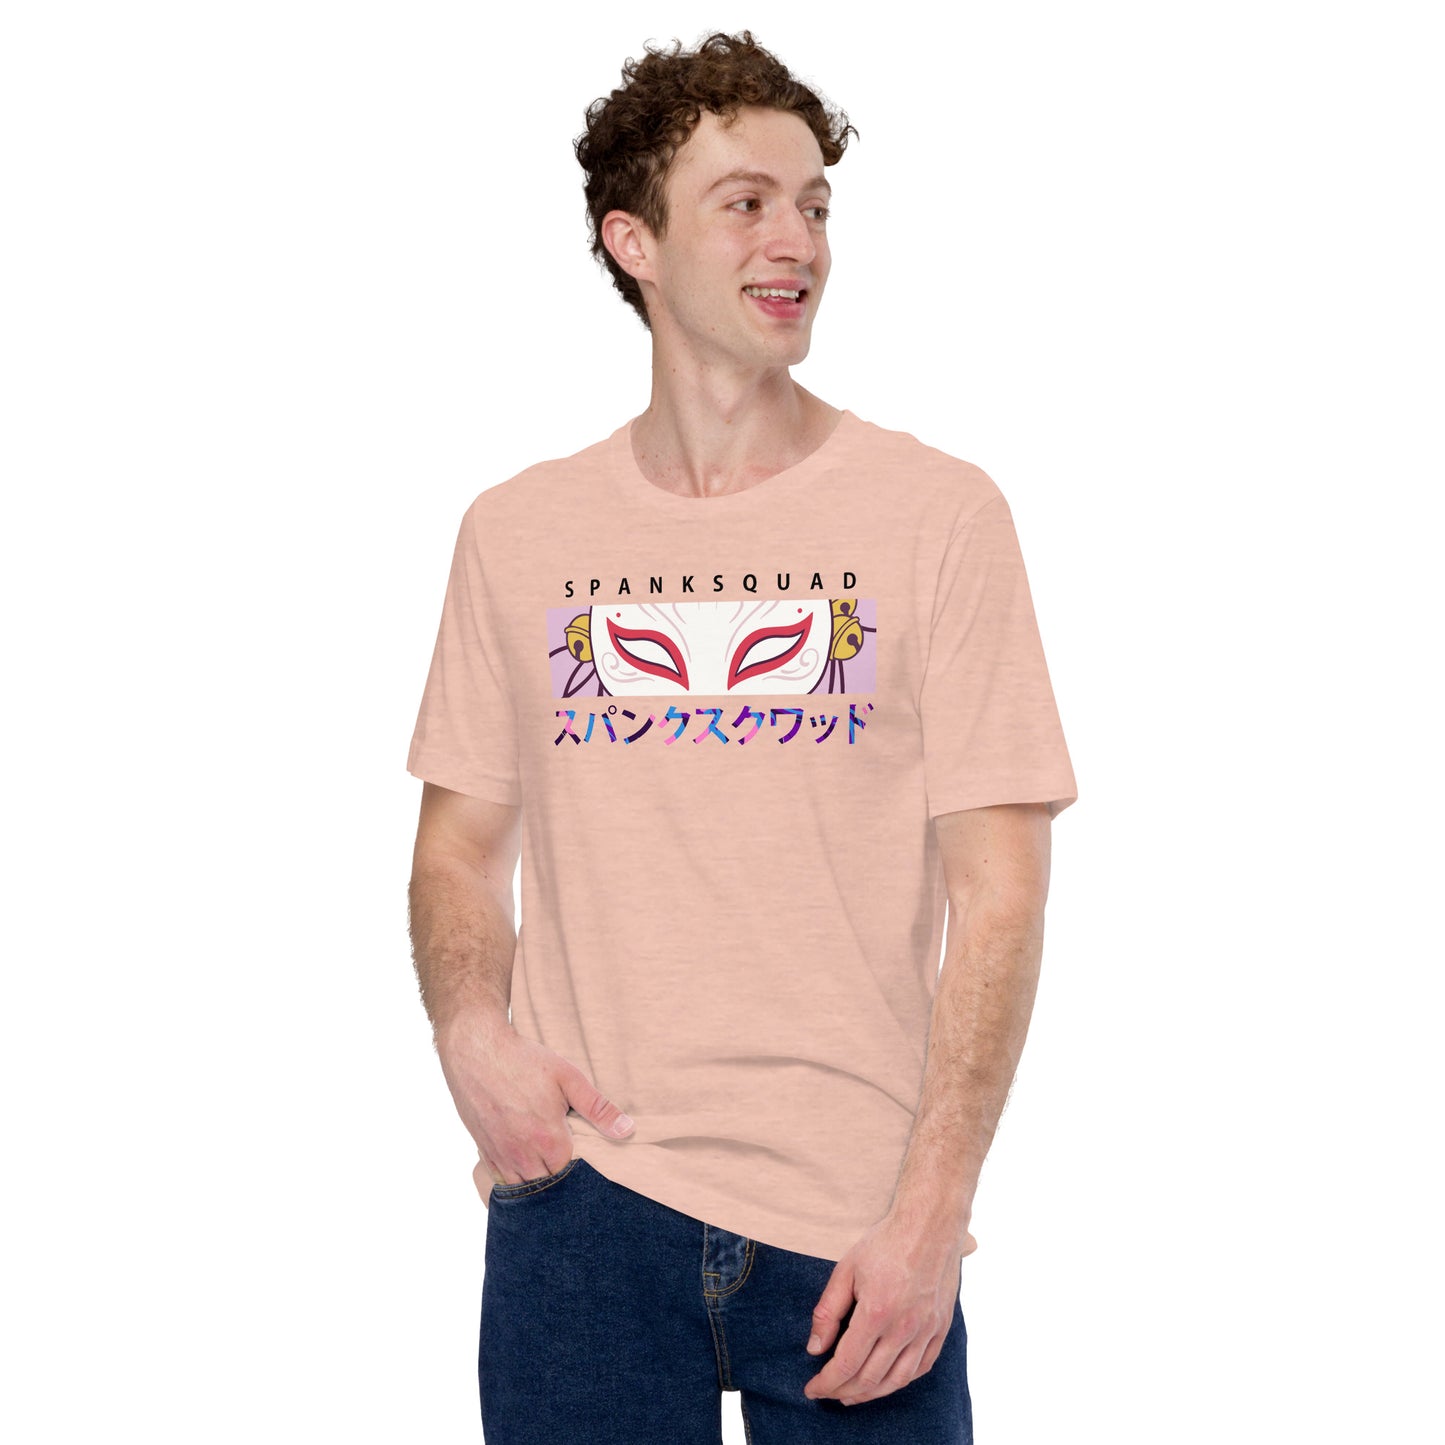 Adult SpankQueen 'Spank Squad' Staple T-shirt - Rainbow Text